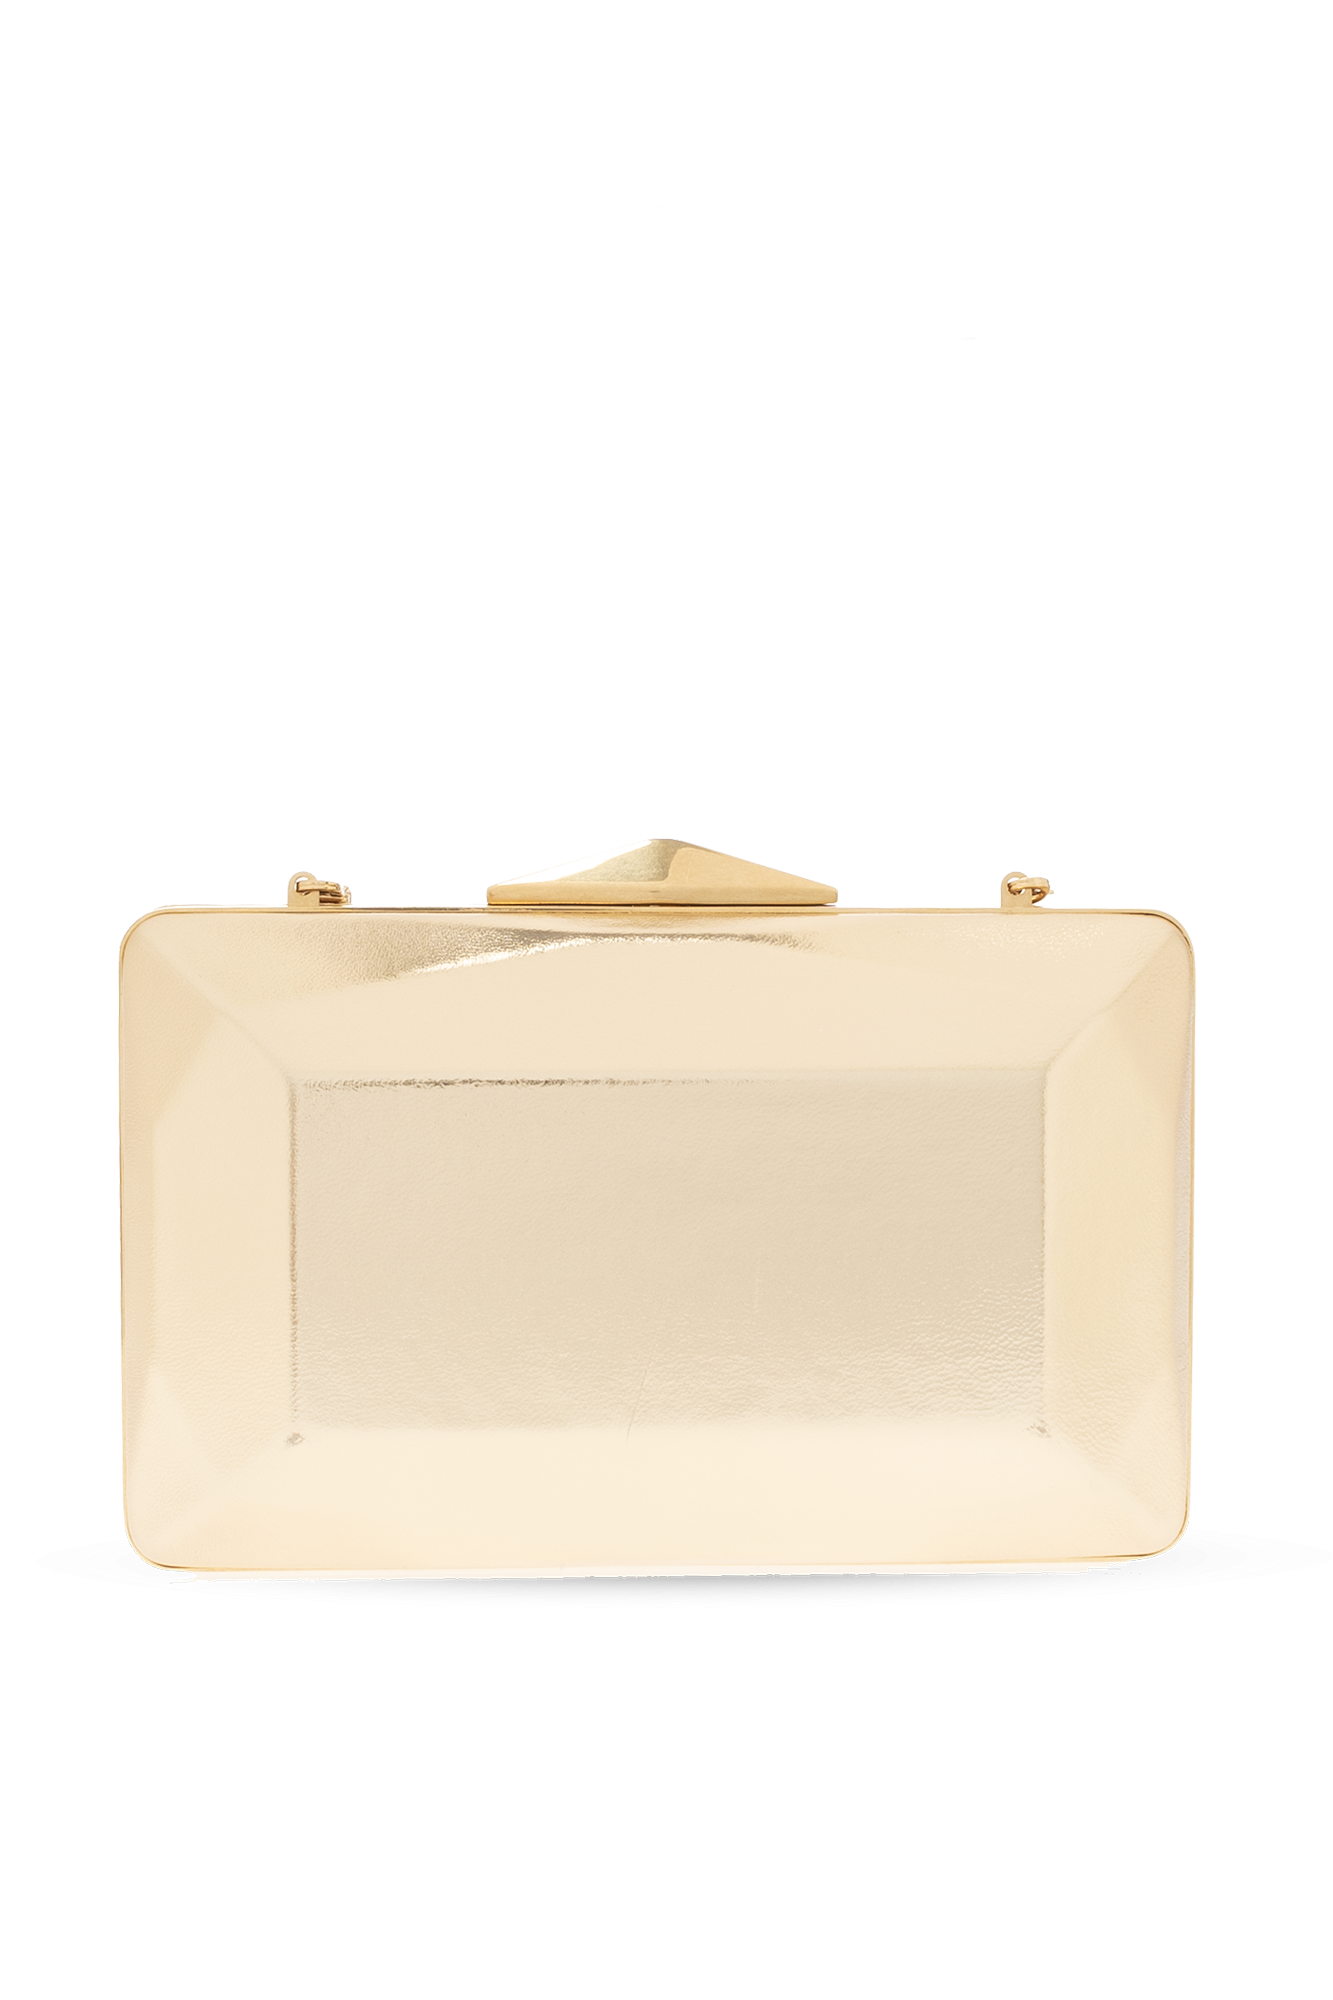 Jimmy Choo ‘Diamond Box’ handbag